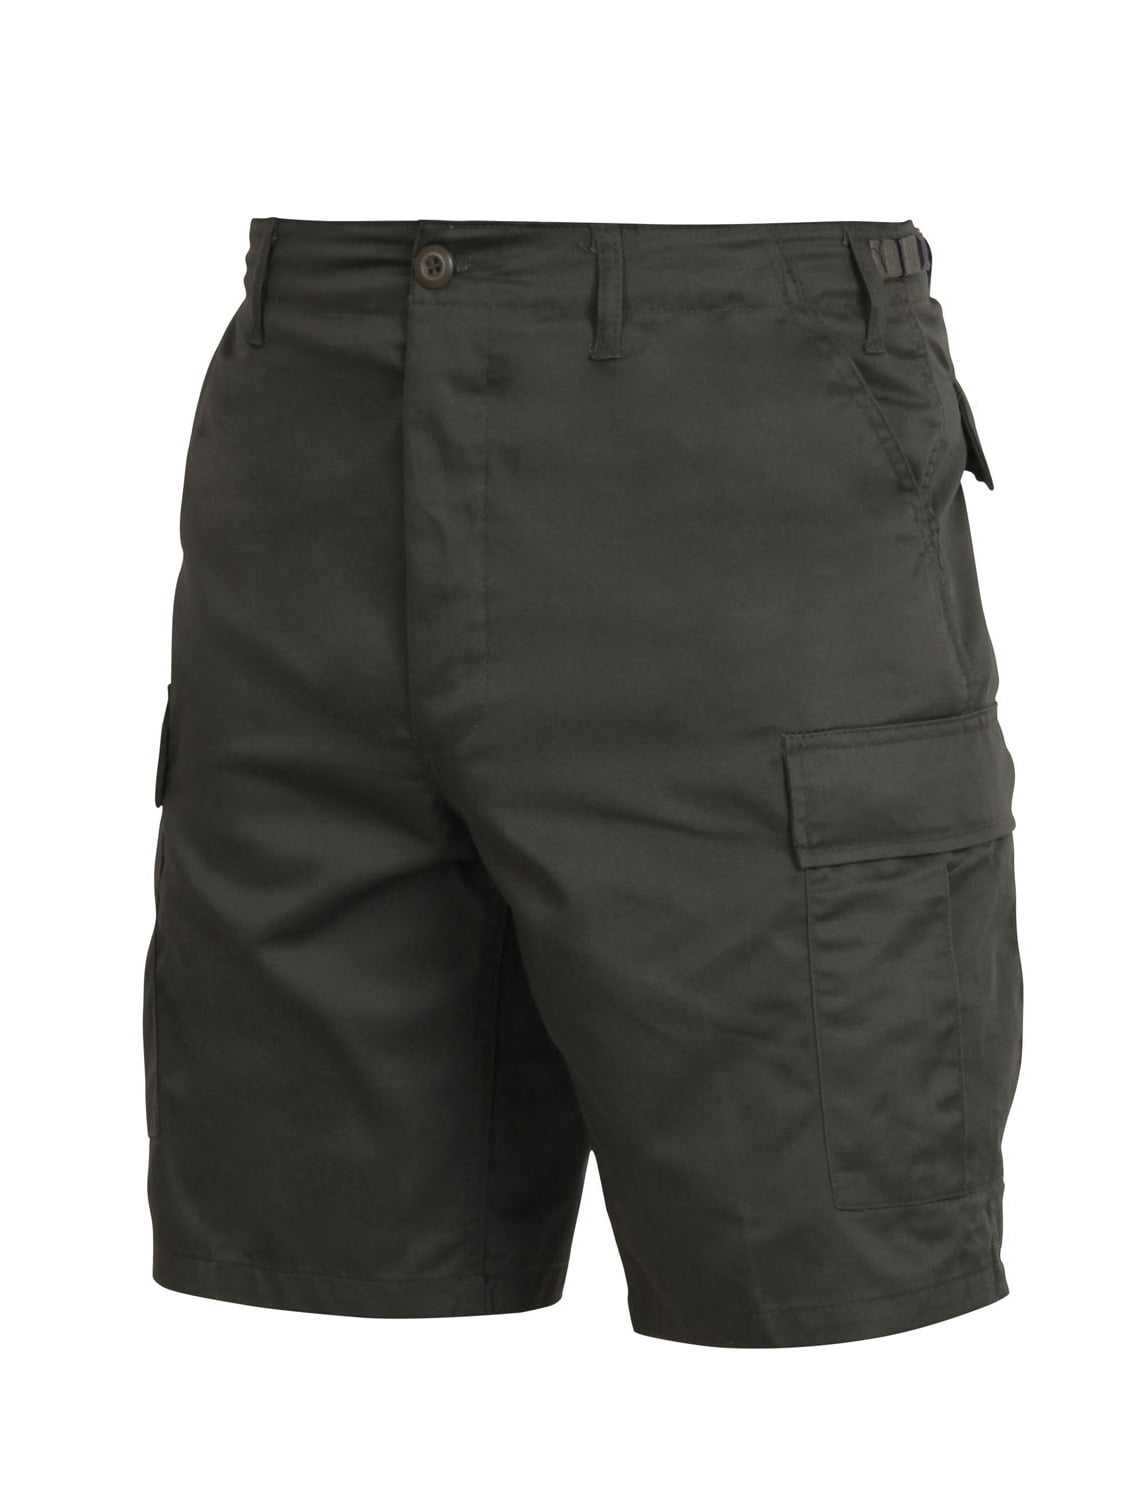 Rothco Men's Tactical Solid BDU Combat Shorts - 2XLarge, Olive Drab ...